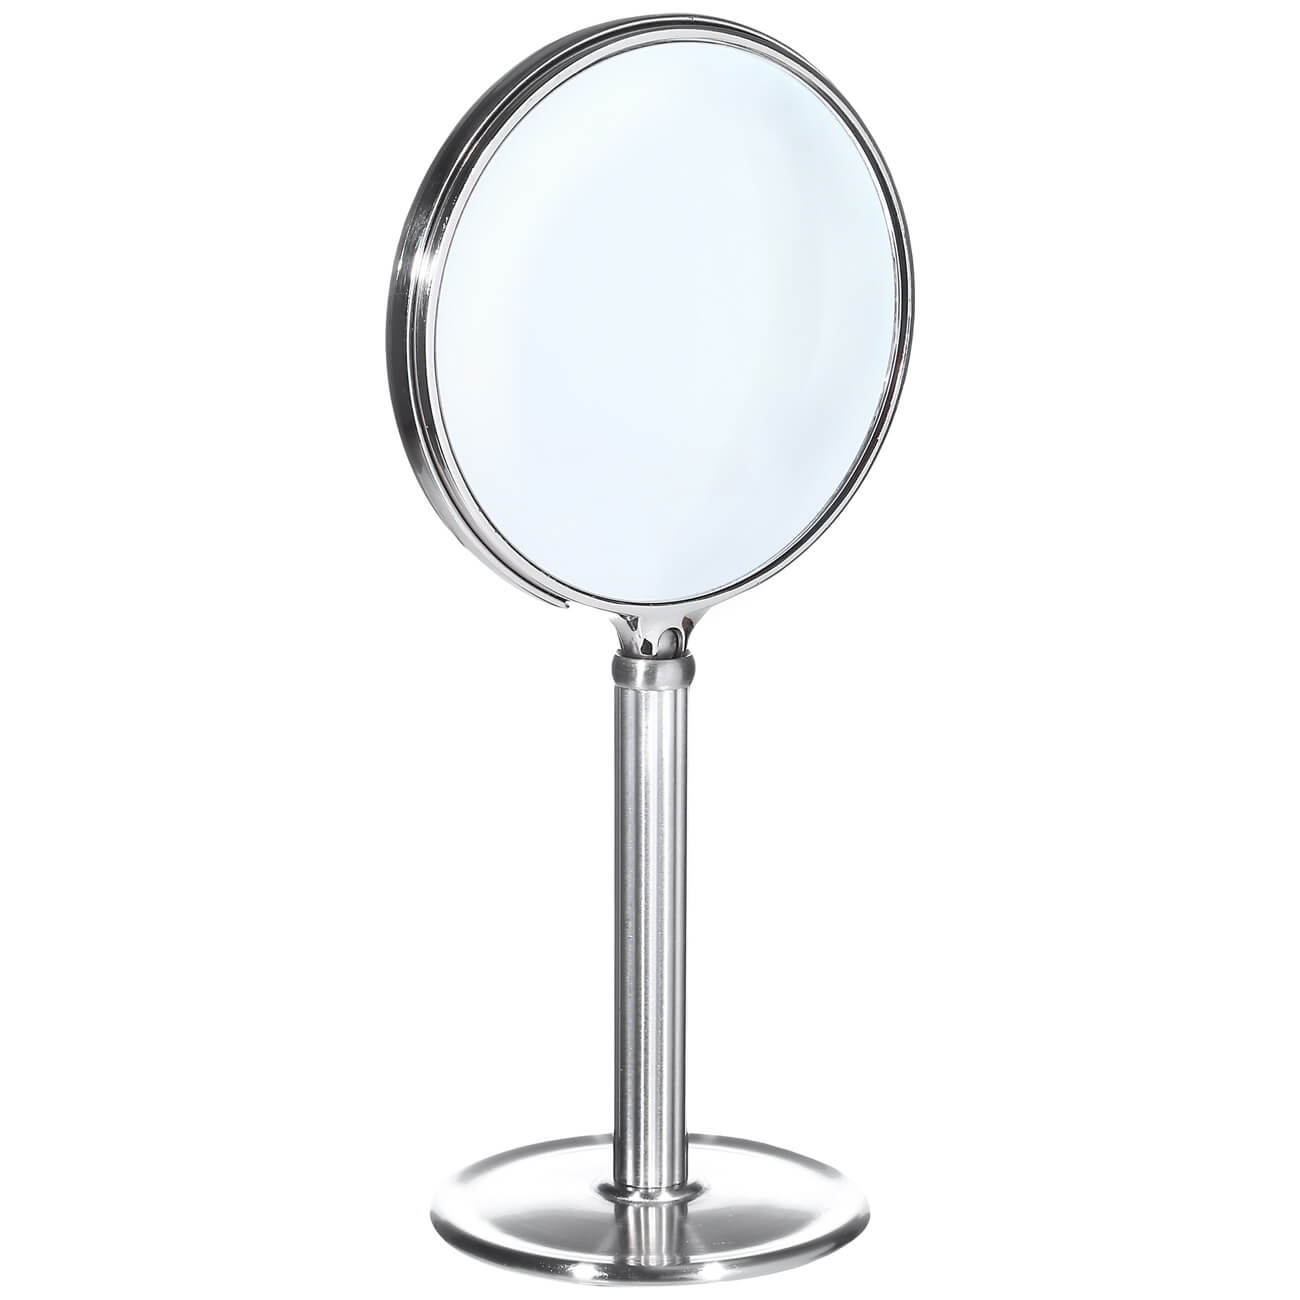 Зеркало настольное, 17 см, двустороннее, на ножке, металл, круглое, Fantastic зеркало настольное 17 см двустороннее на ножке металл круглое fantastic